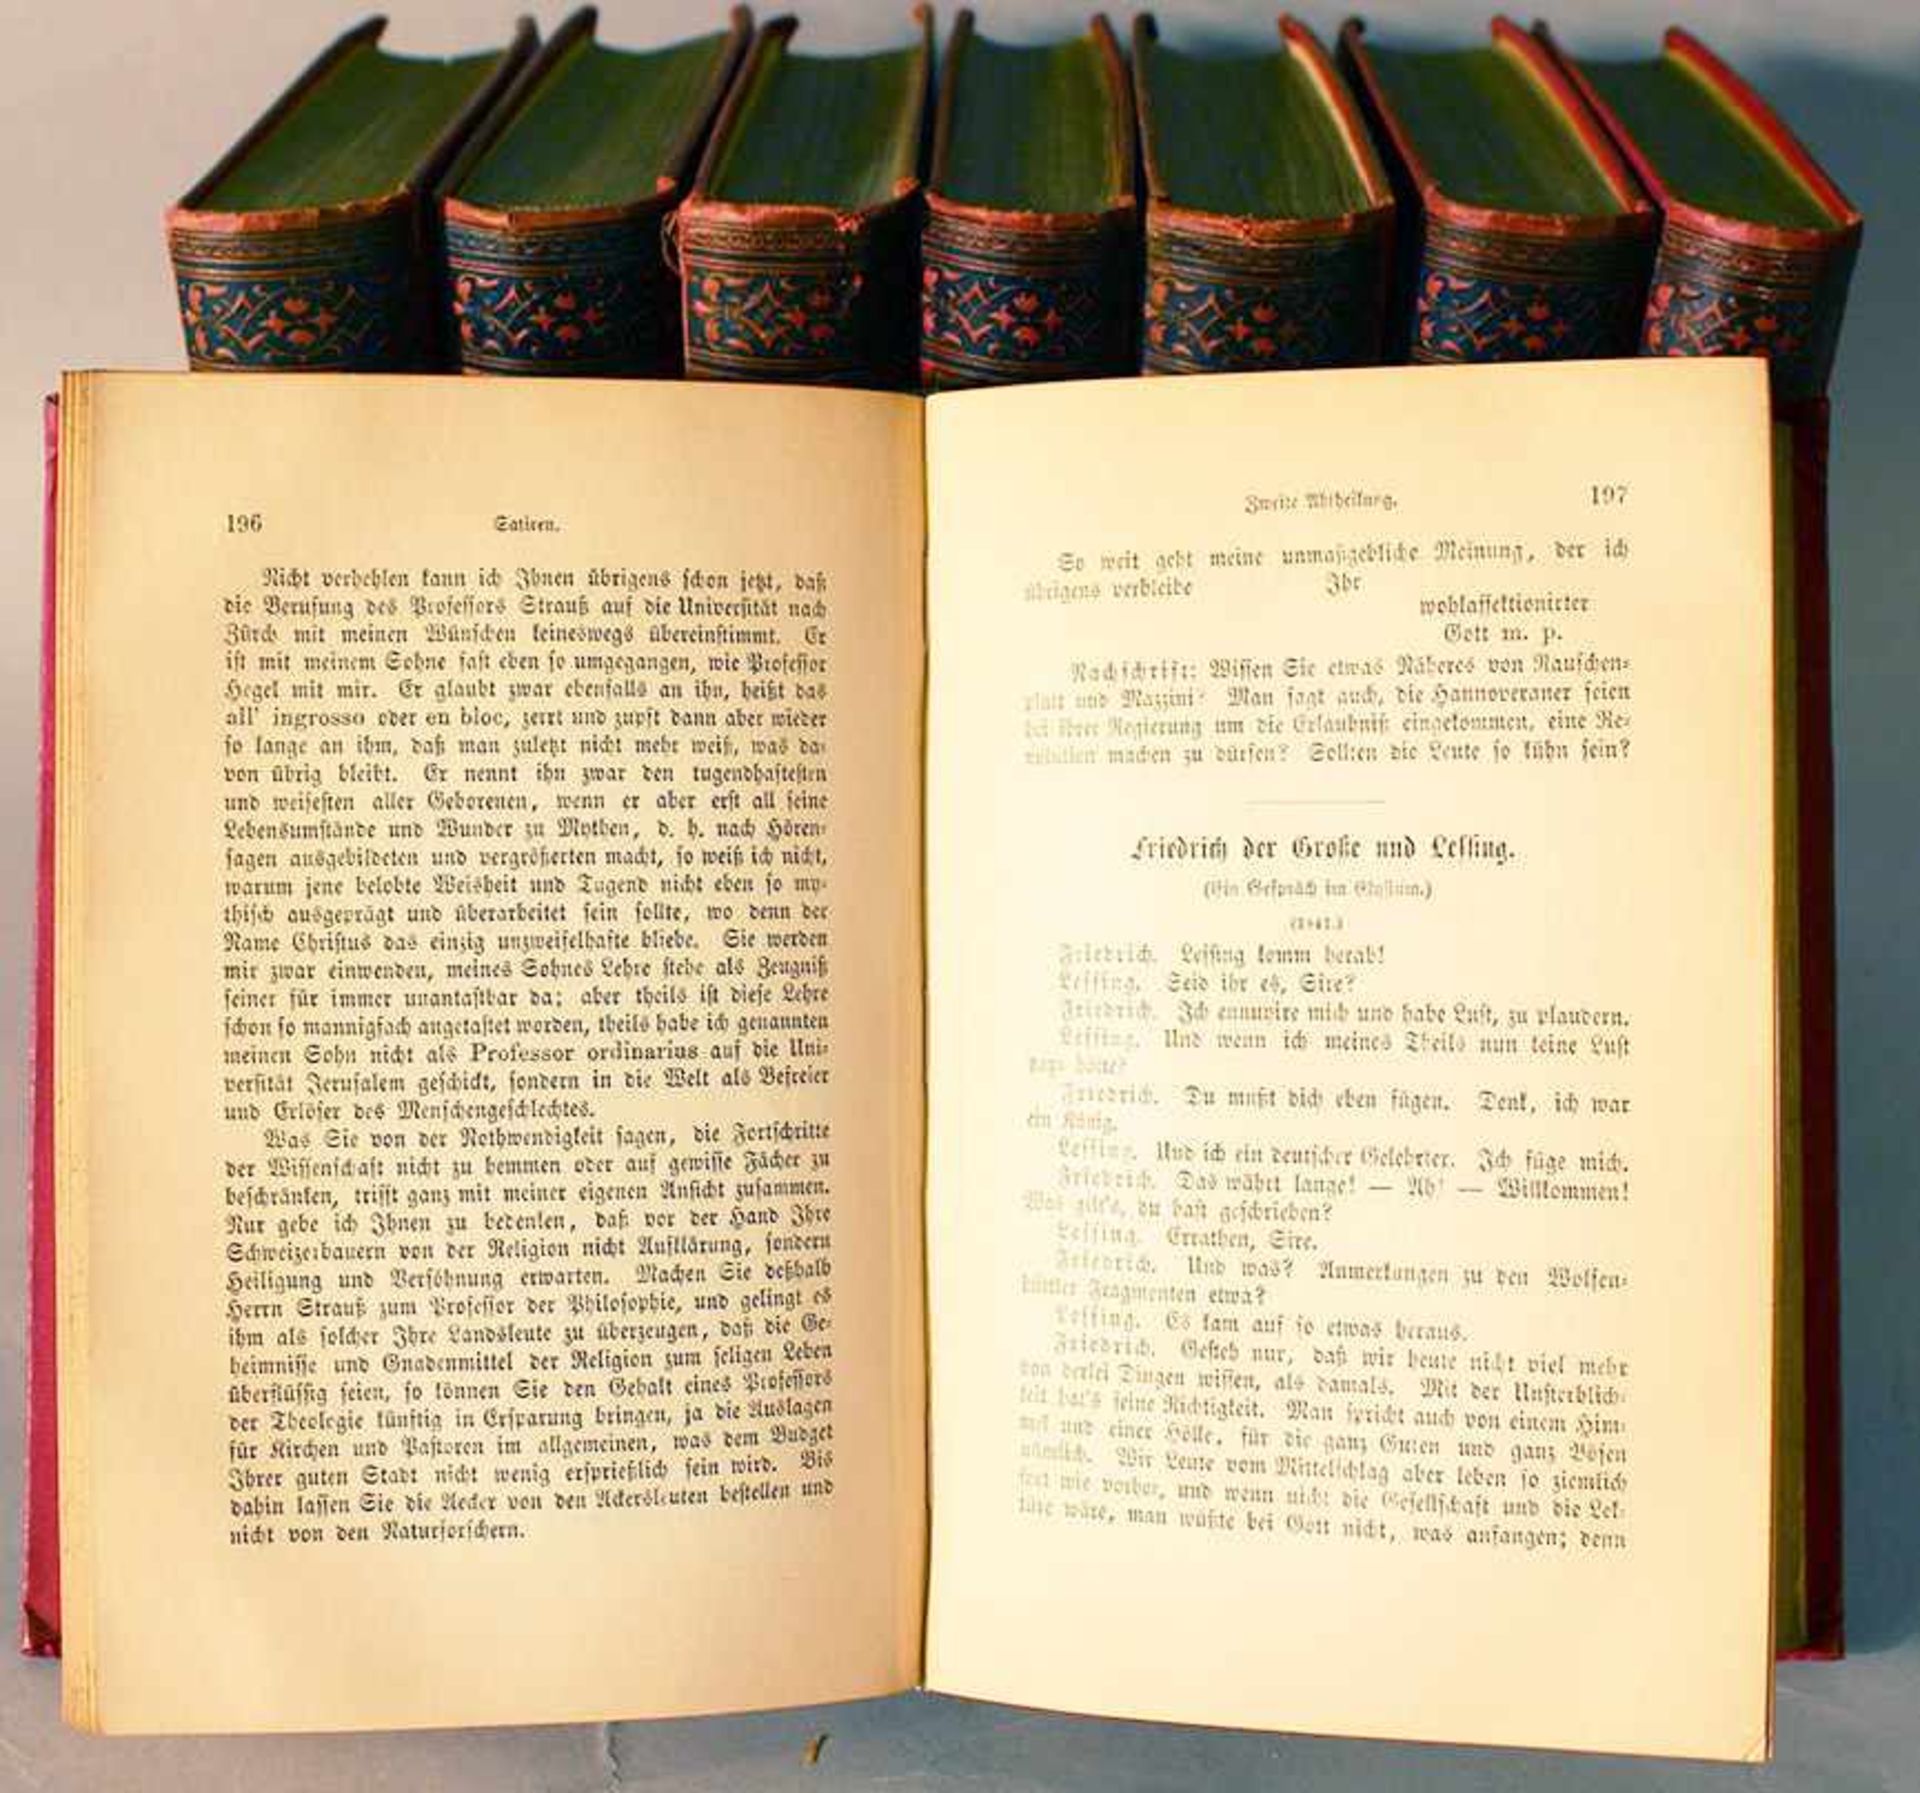 Franz Grillparzer, 16 in 8 books volumes by Cotta Stuttgart 1887, in red and gilded hard-covers.18 x - Bild 3 aus 3